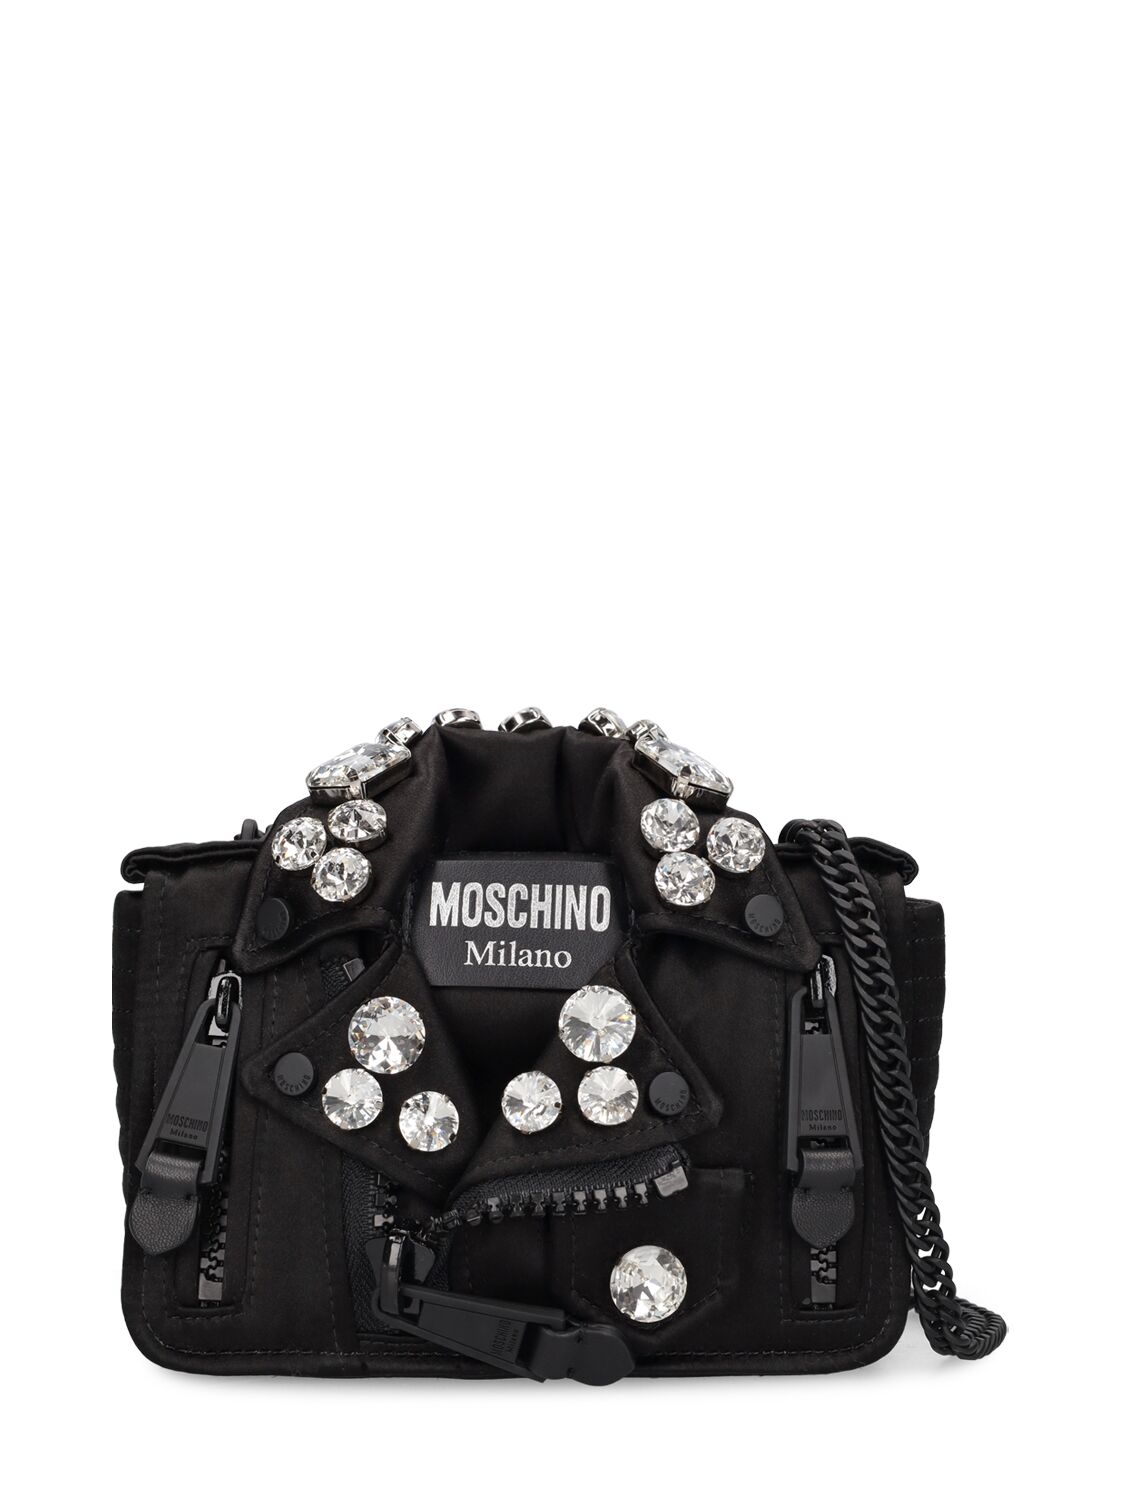 Moschino Still Life With Heart Biker Shoulder Bag In Black